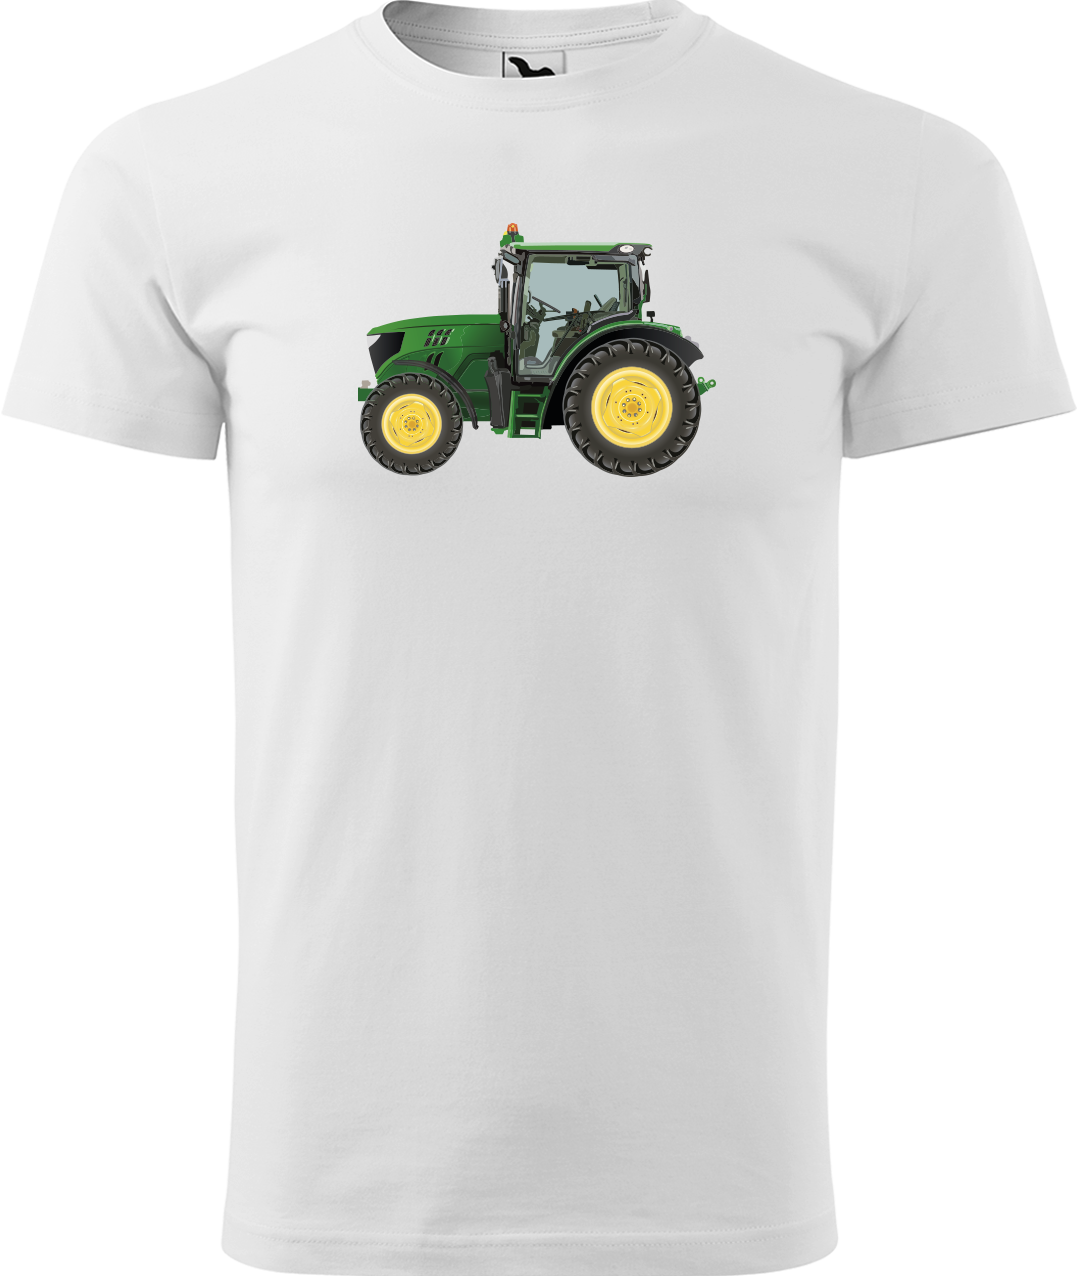 Tričko s traktorem - Zelený traktor Velikost: L, Barva: Bílá (00)